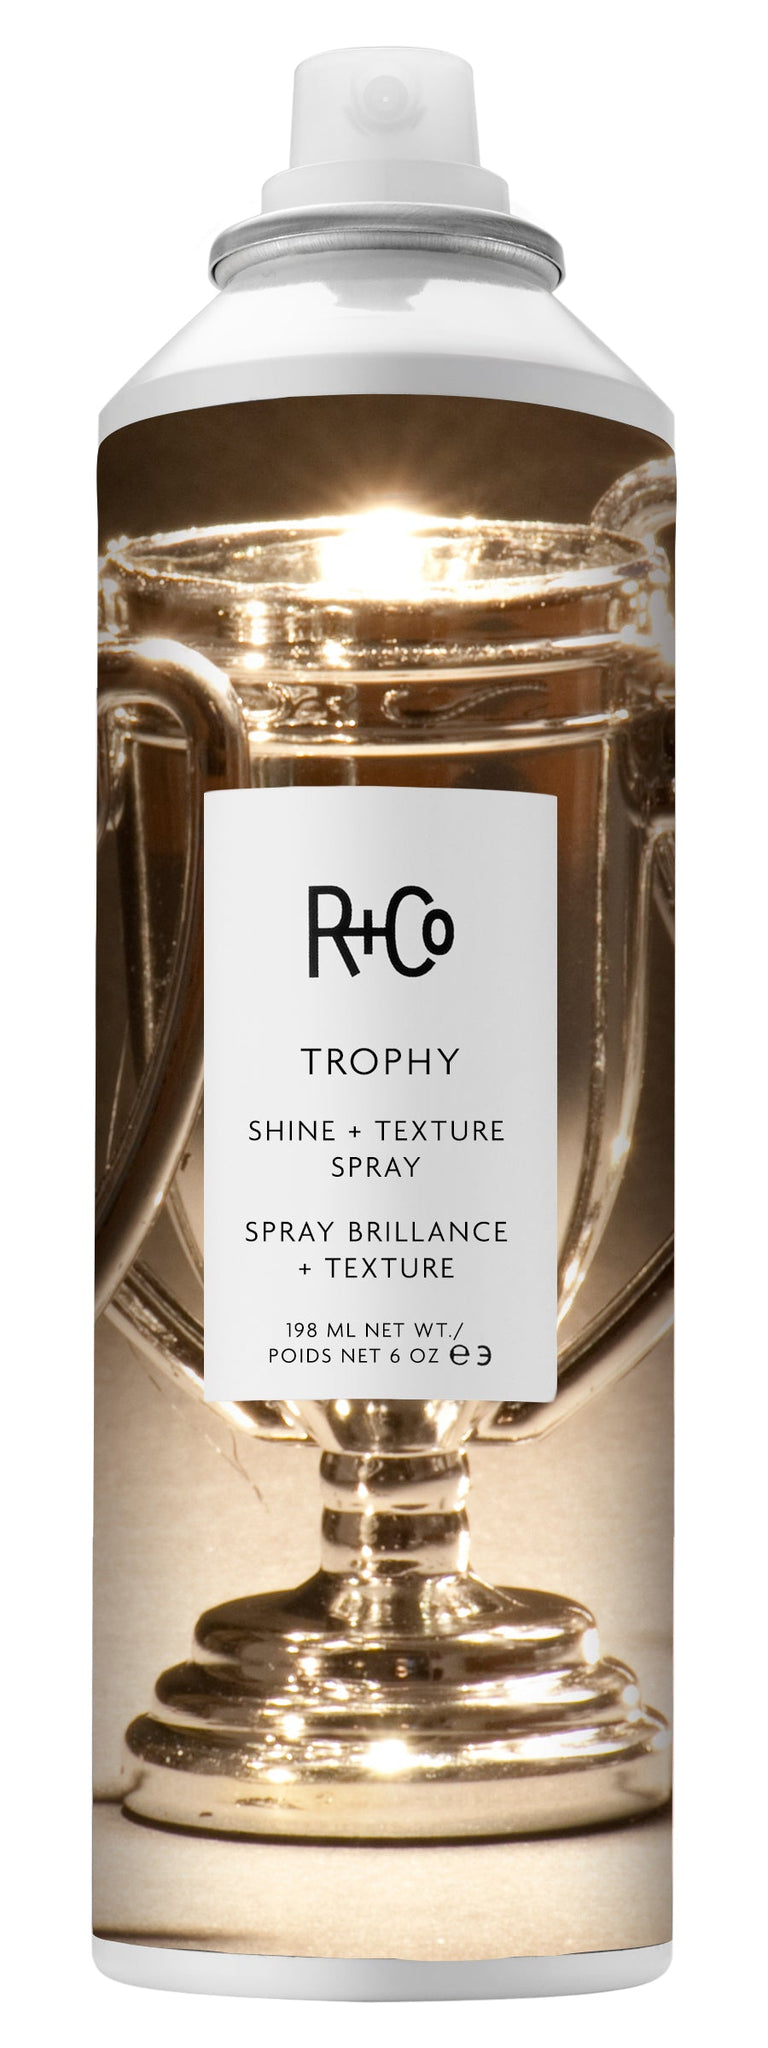 R+Co TROPHY / Shine + Texture Spray 198ml